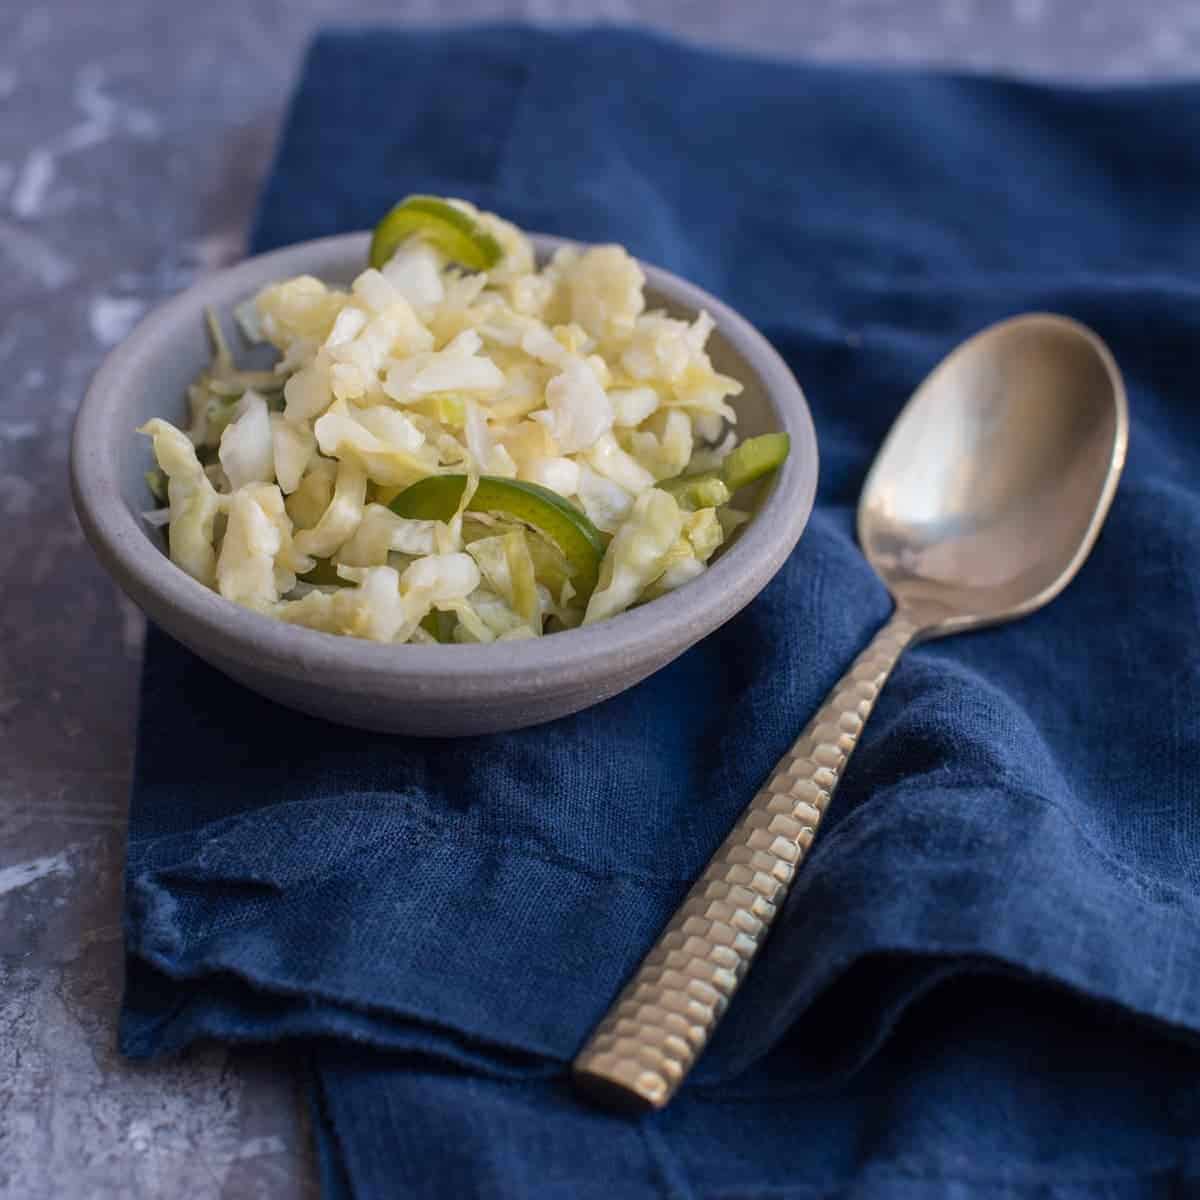 https://www.foodologygeek.com/wp-content/uploads/2018/07/spicy-jalapeno-sauerkraut-bowl.jpg